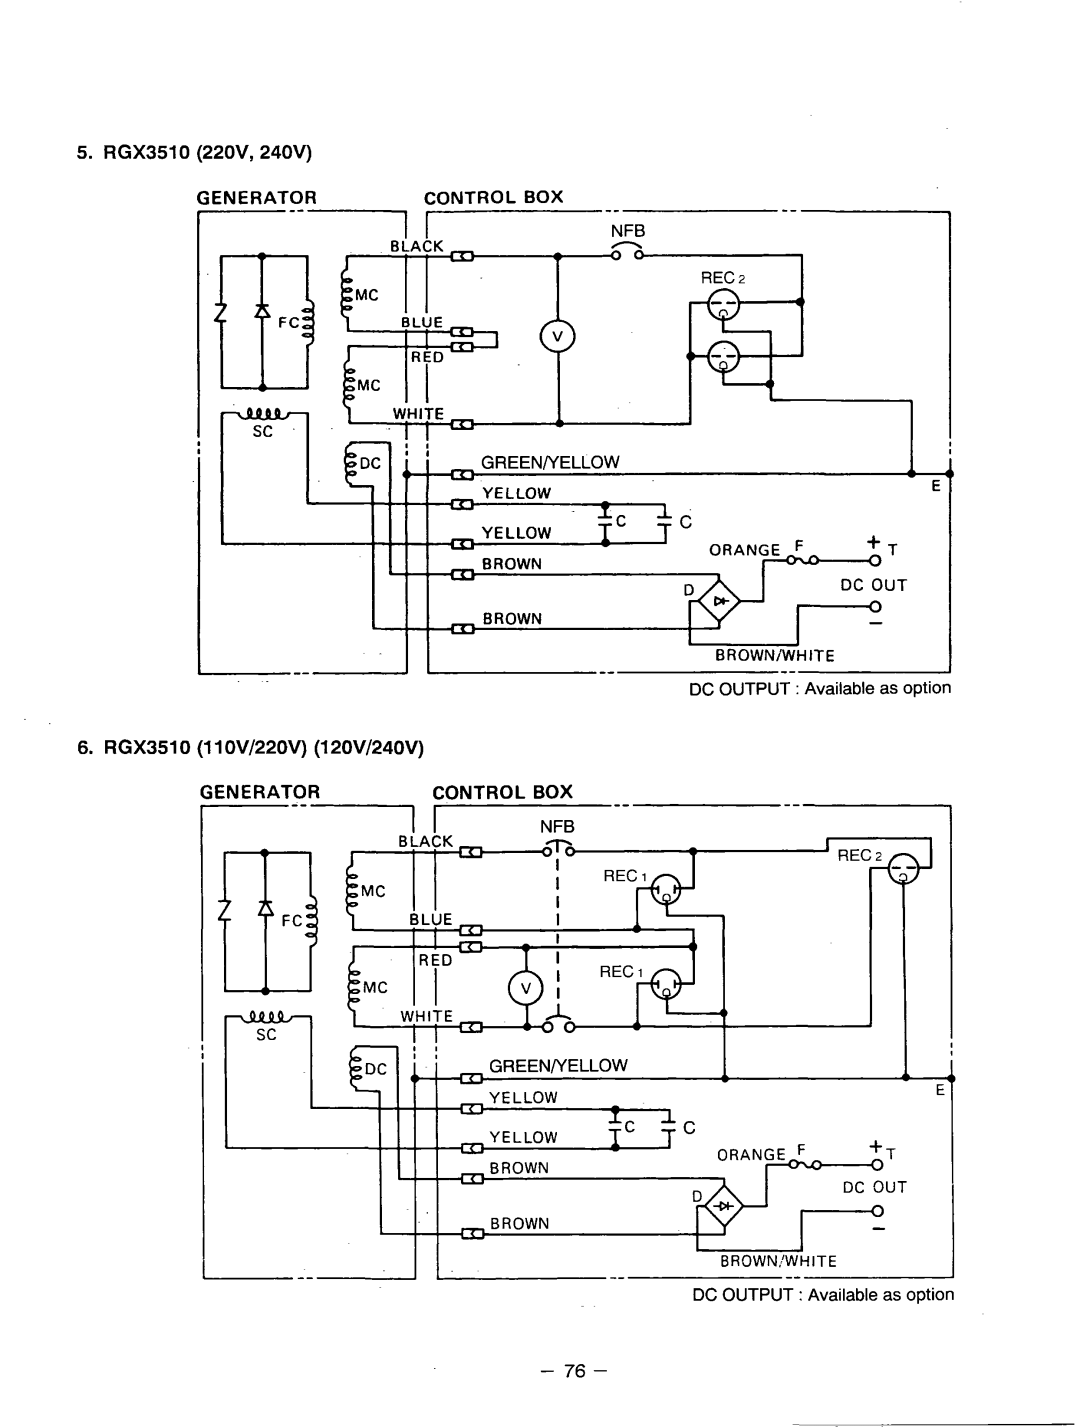 Subaru Robin Power Products manual I I Nfb, 5.RGX3510 220V, 6.RGX3510 11OV/22OV 120V/240V GENERATORCONTROLBOX, Dc Out 